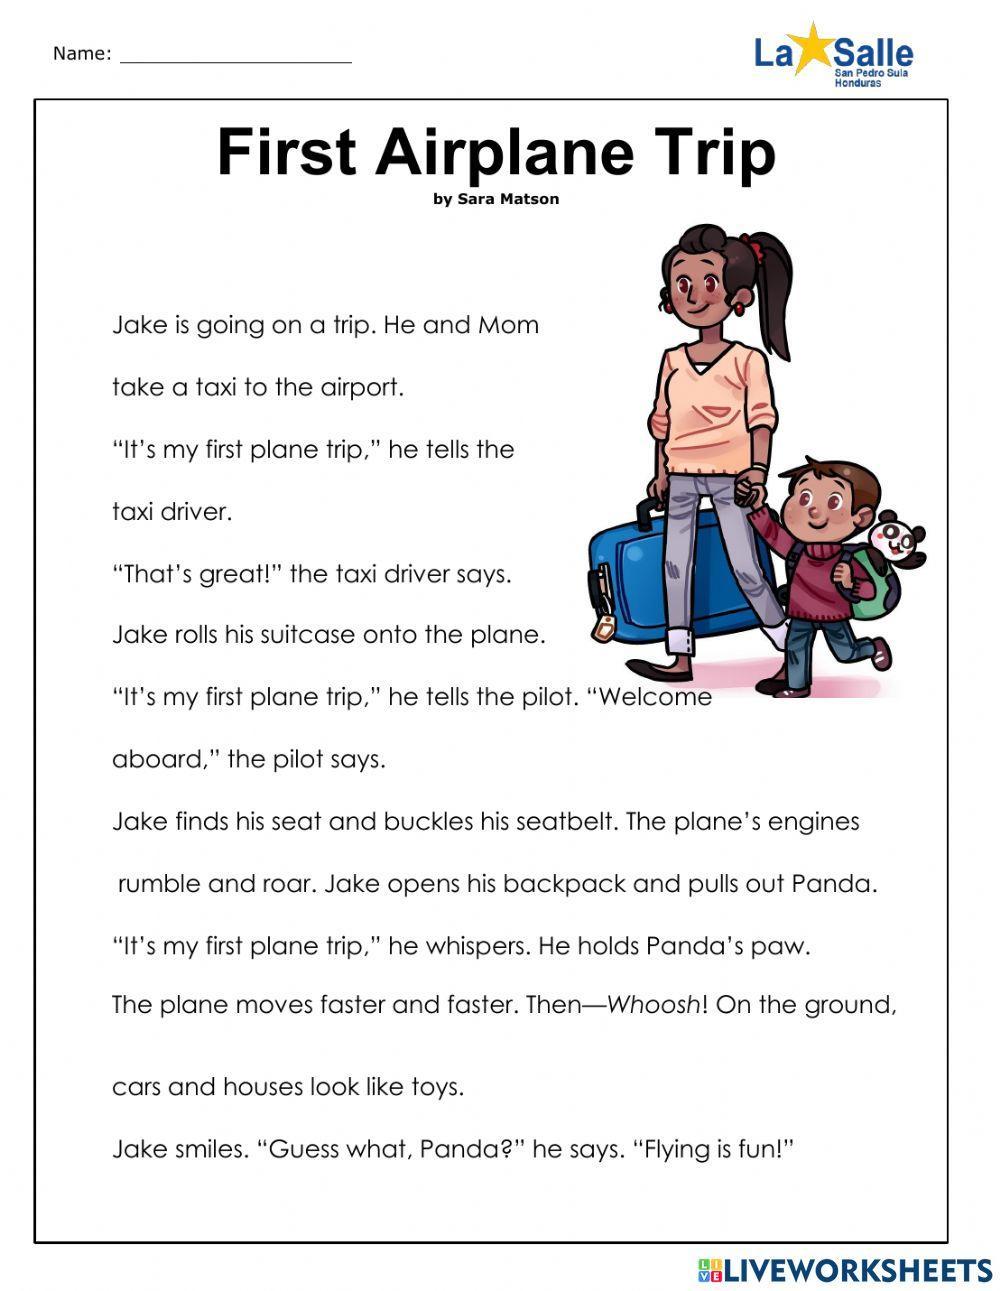 First plane trip